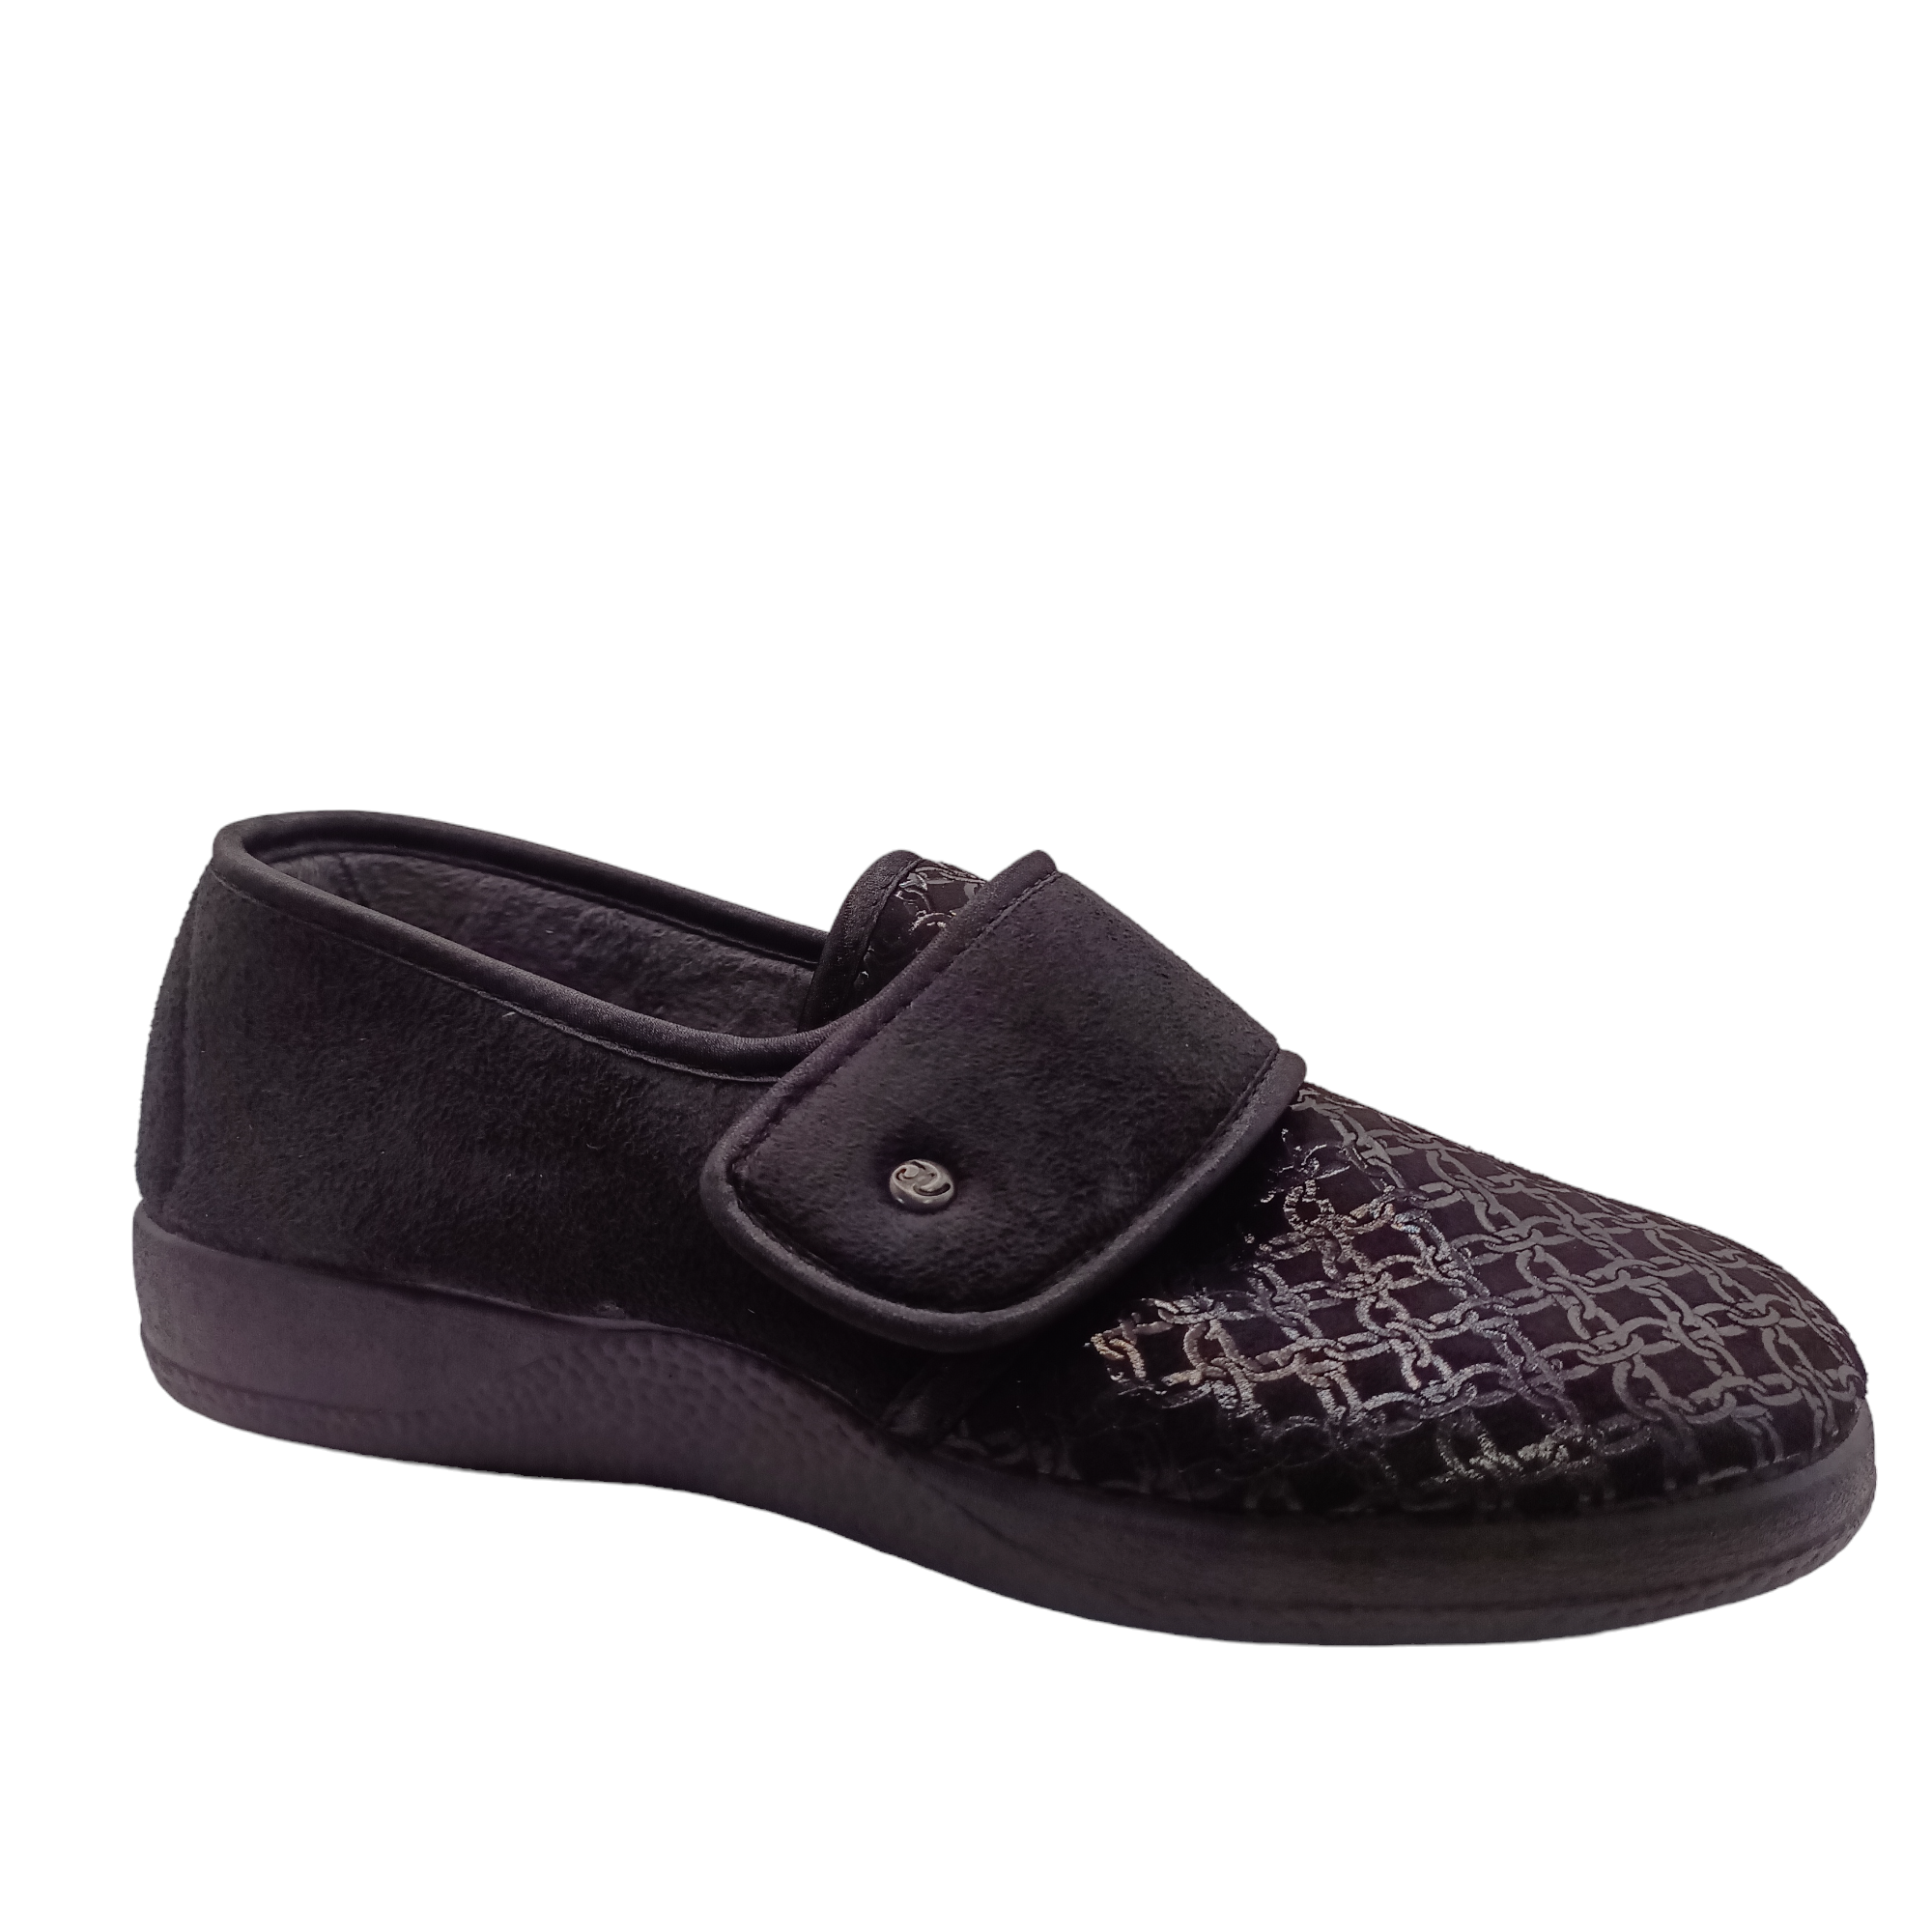 Shop Cadenas DeValverde - with shoe&amp;me - from DeValverde - Slippers - Slipper, Winter, Womens - [collection]